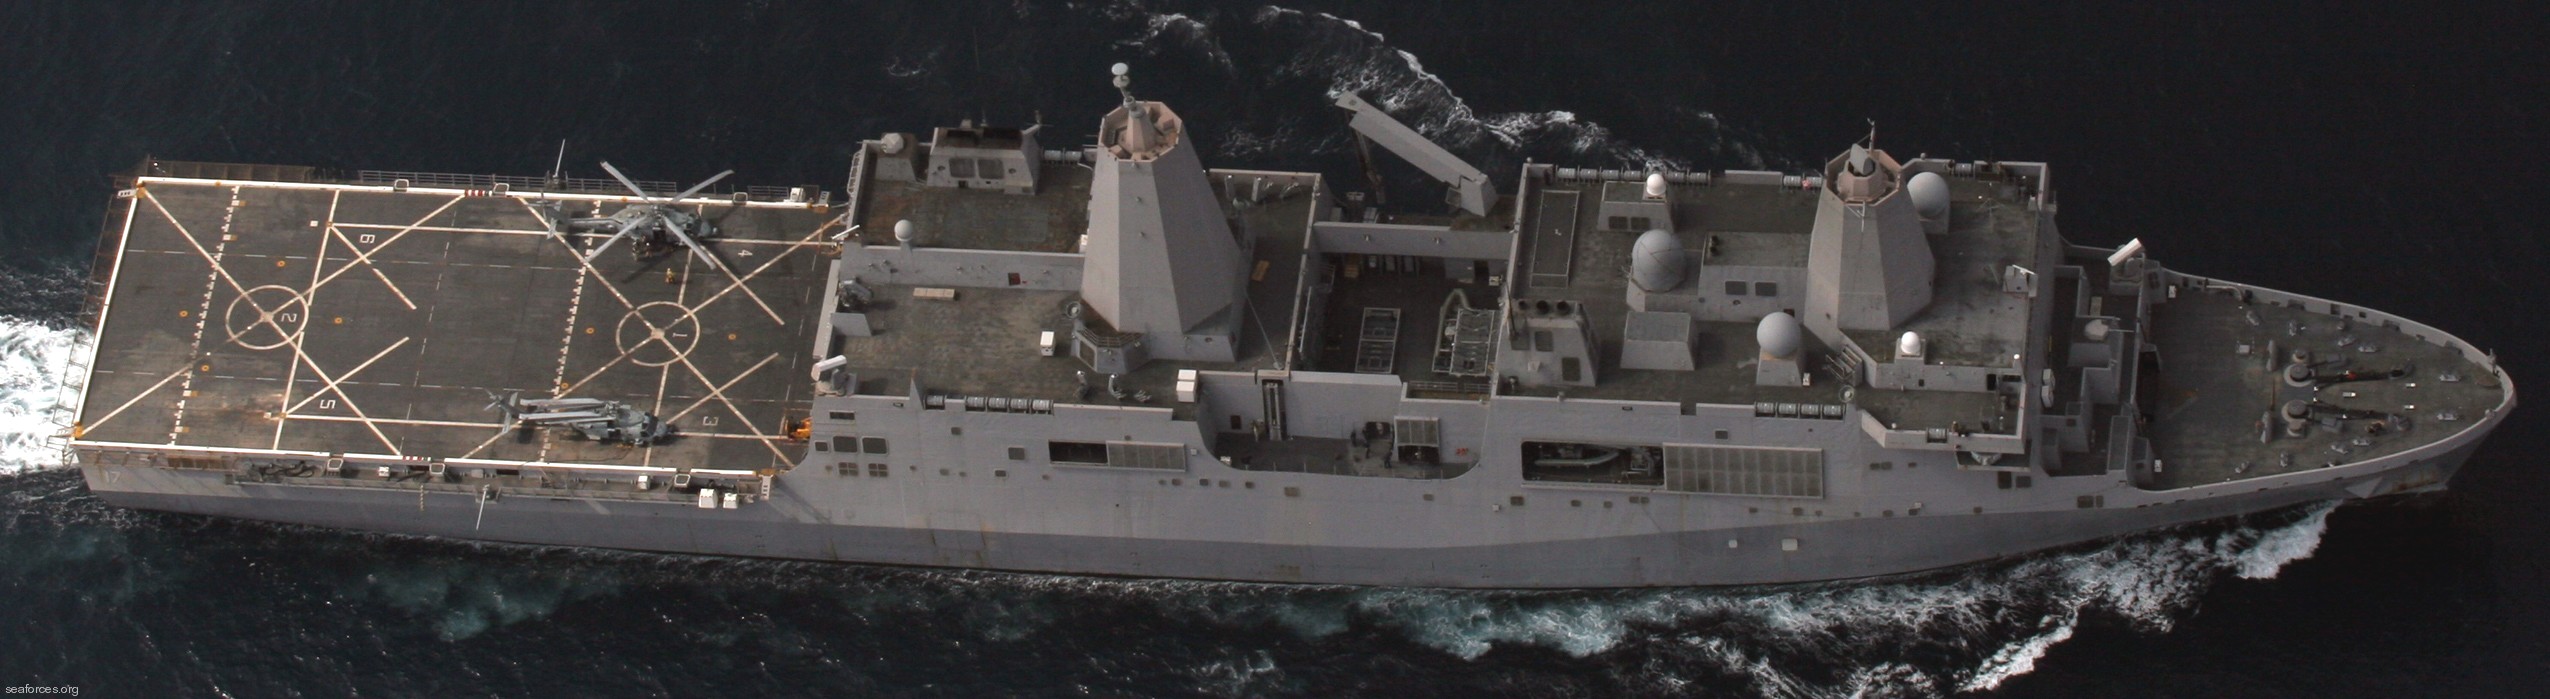 lpd-17 uss san antonio amphibious transport dock navy 36